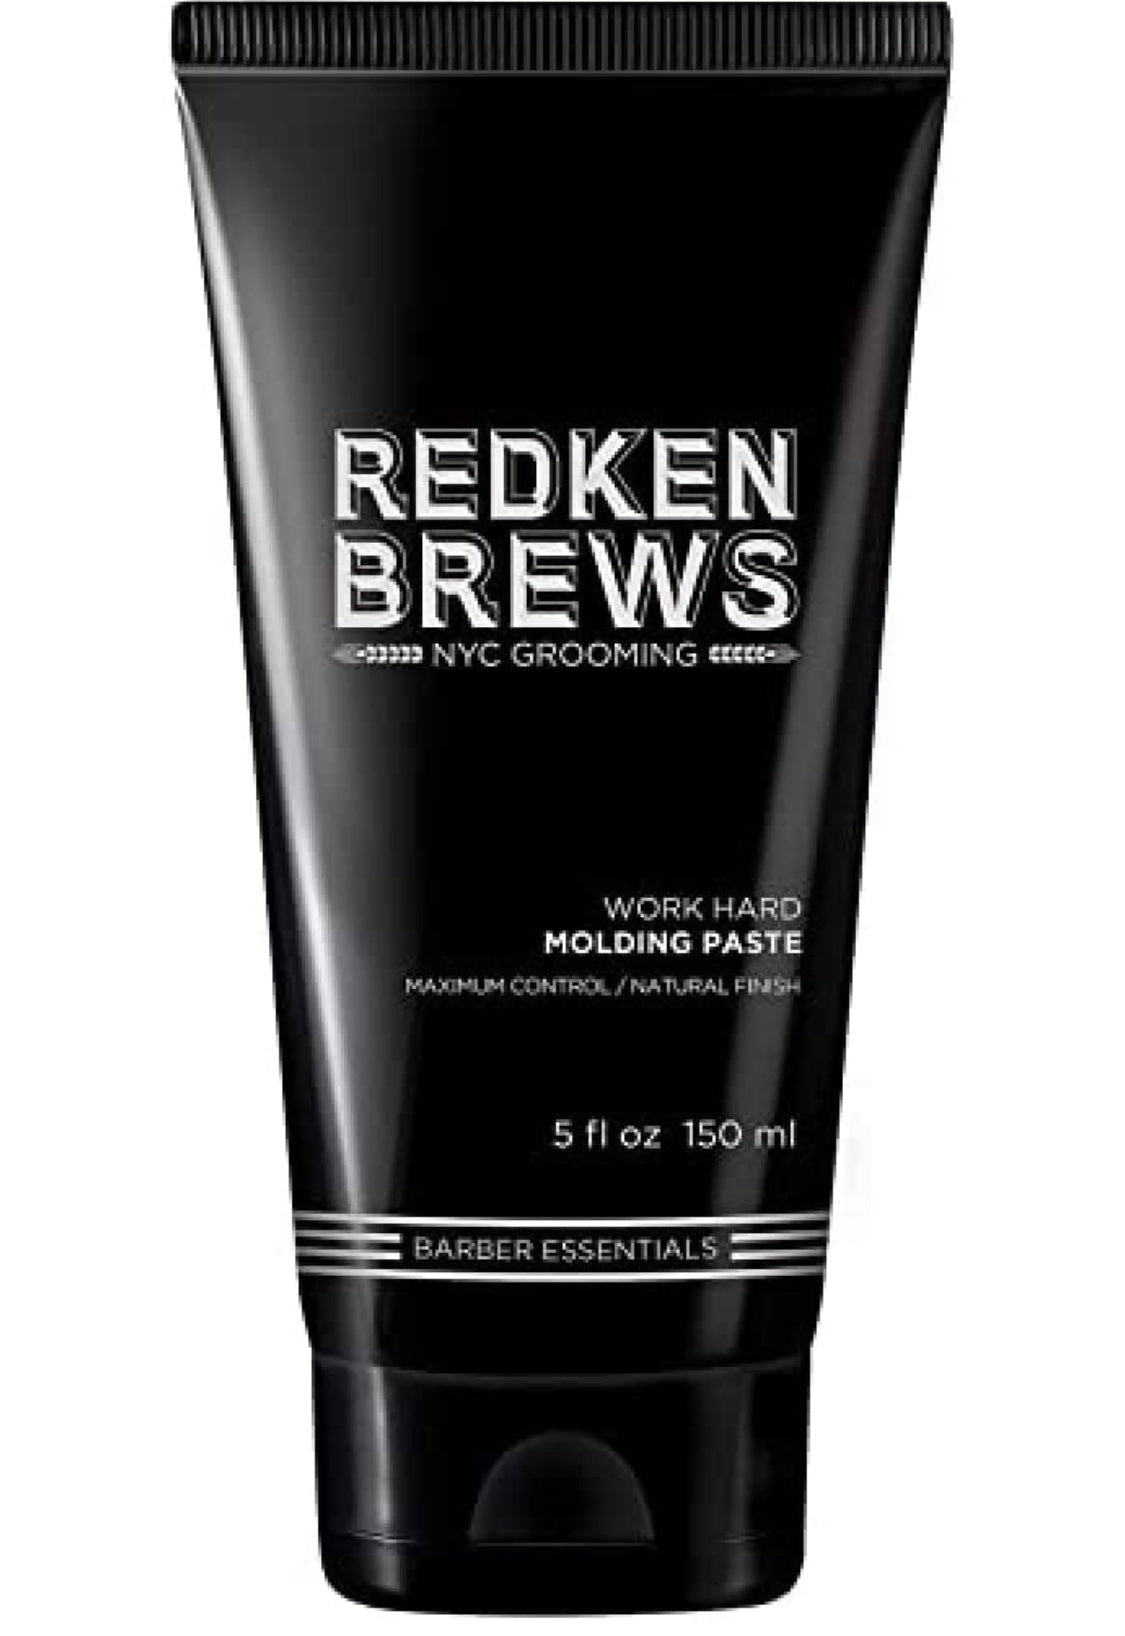 Redken - Brews work hard molding paste 5 fl. oz./ 150 ml